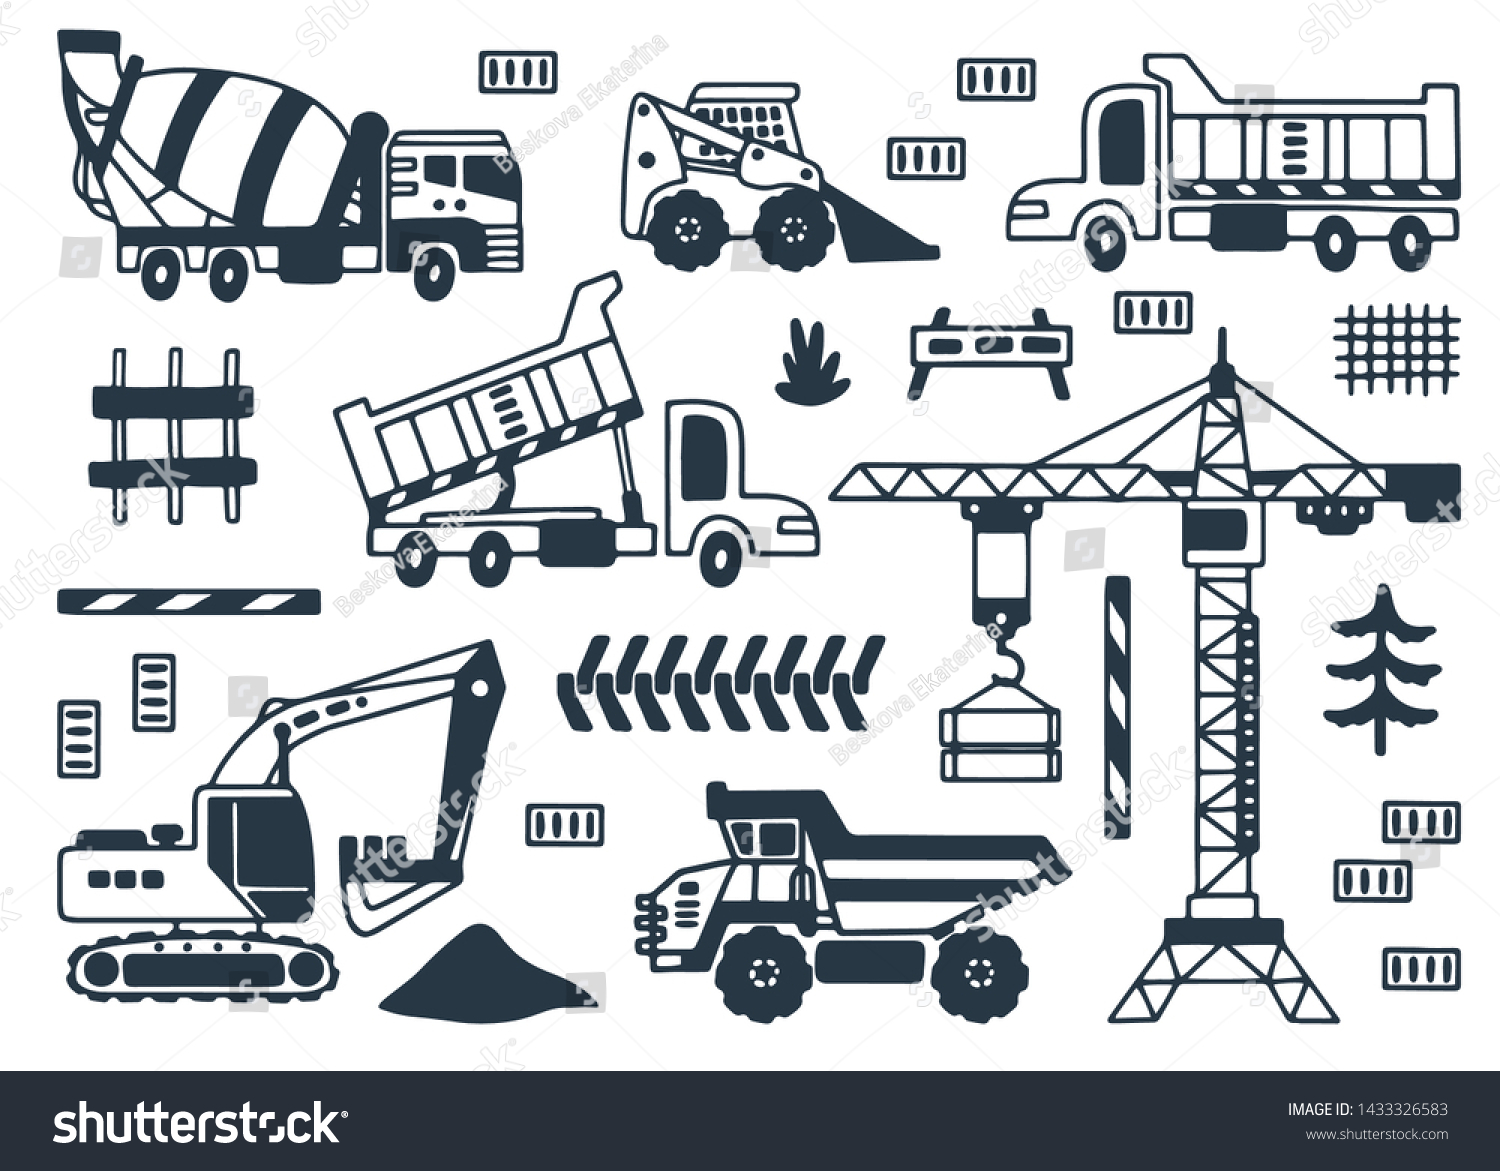 Coloring page set construction trucks crane stock vector royalty free